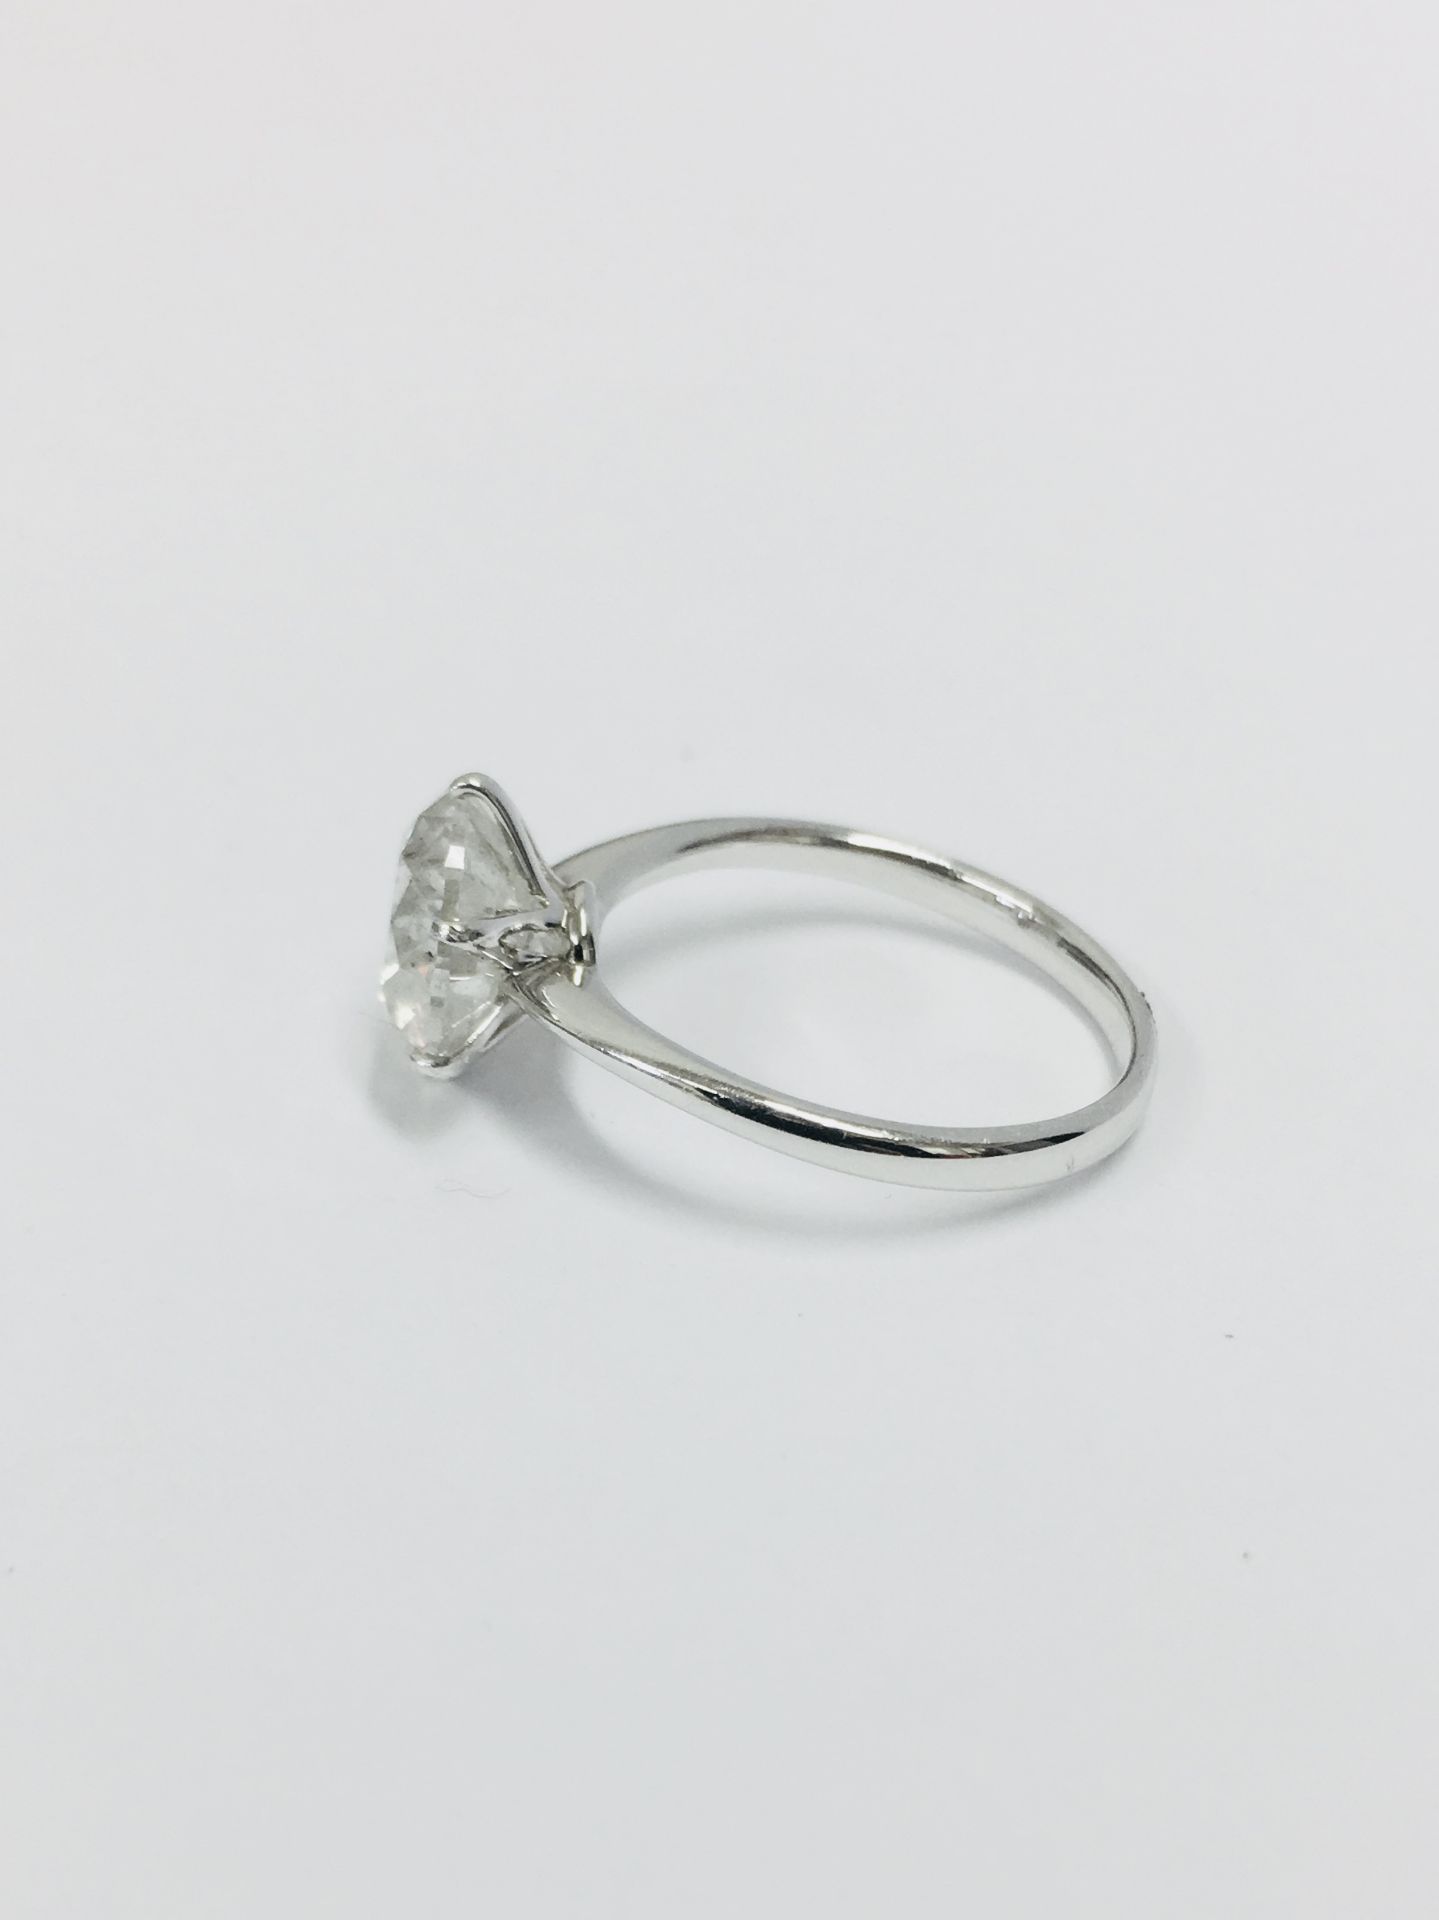 3.01ct brilliant cut natural diamond, I2 clarity I colour(clarity enhanced) ,platinum 6 claw - Image 4 of 4